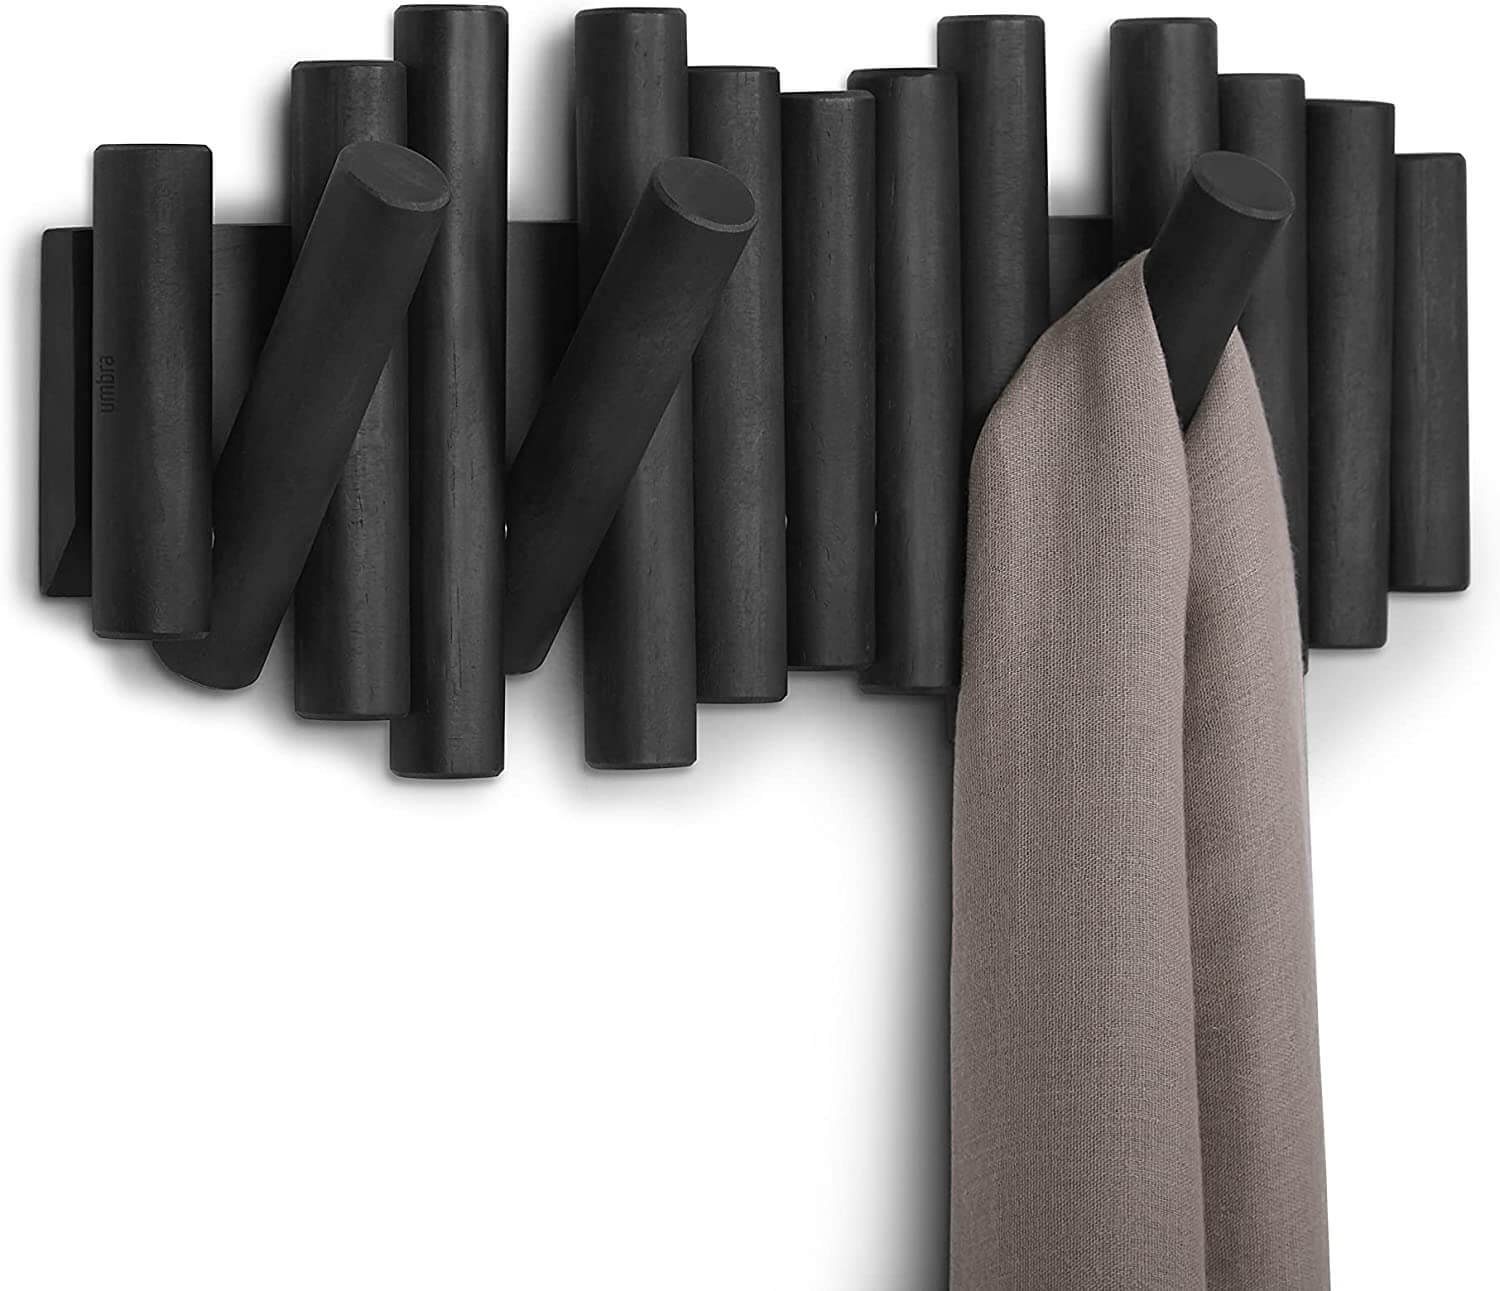 Garderobenleiste Wandhaken Picket Klapphaken mit 5 Kleiderhaken, Umbra 5 schwarz Garderobenhaken Garderobenhaken